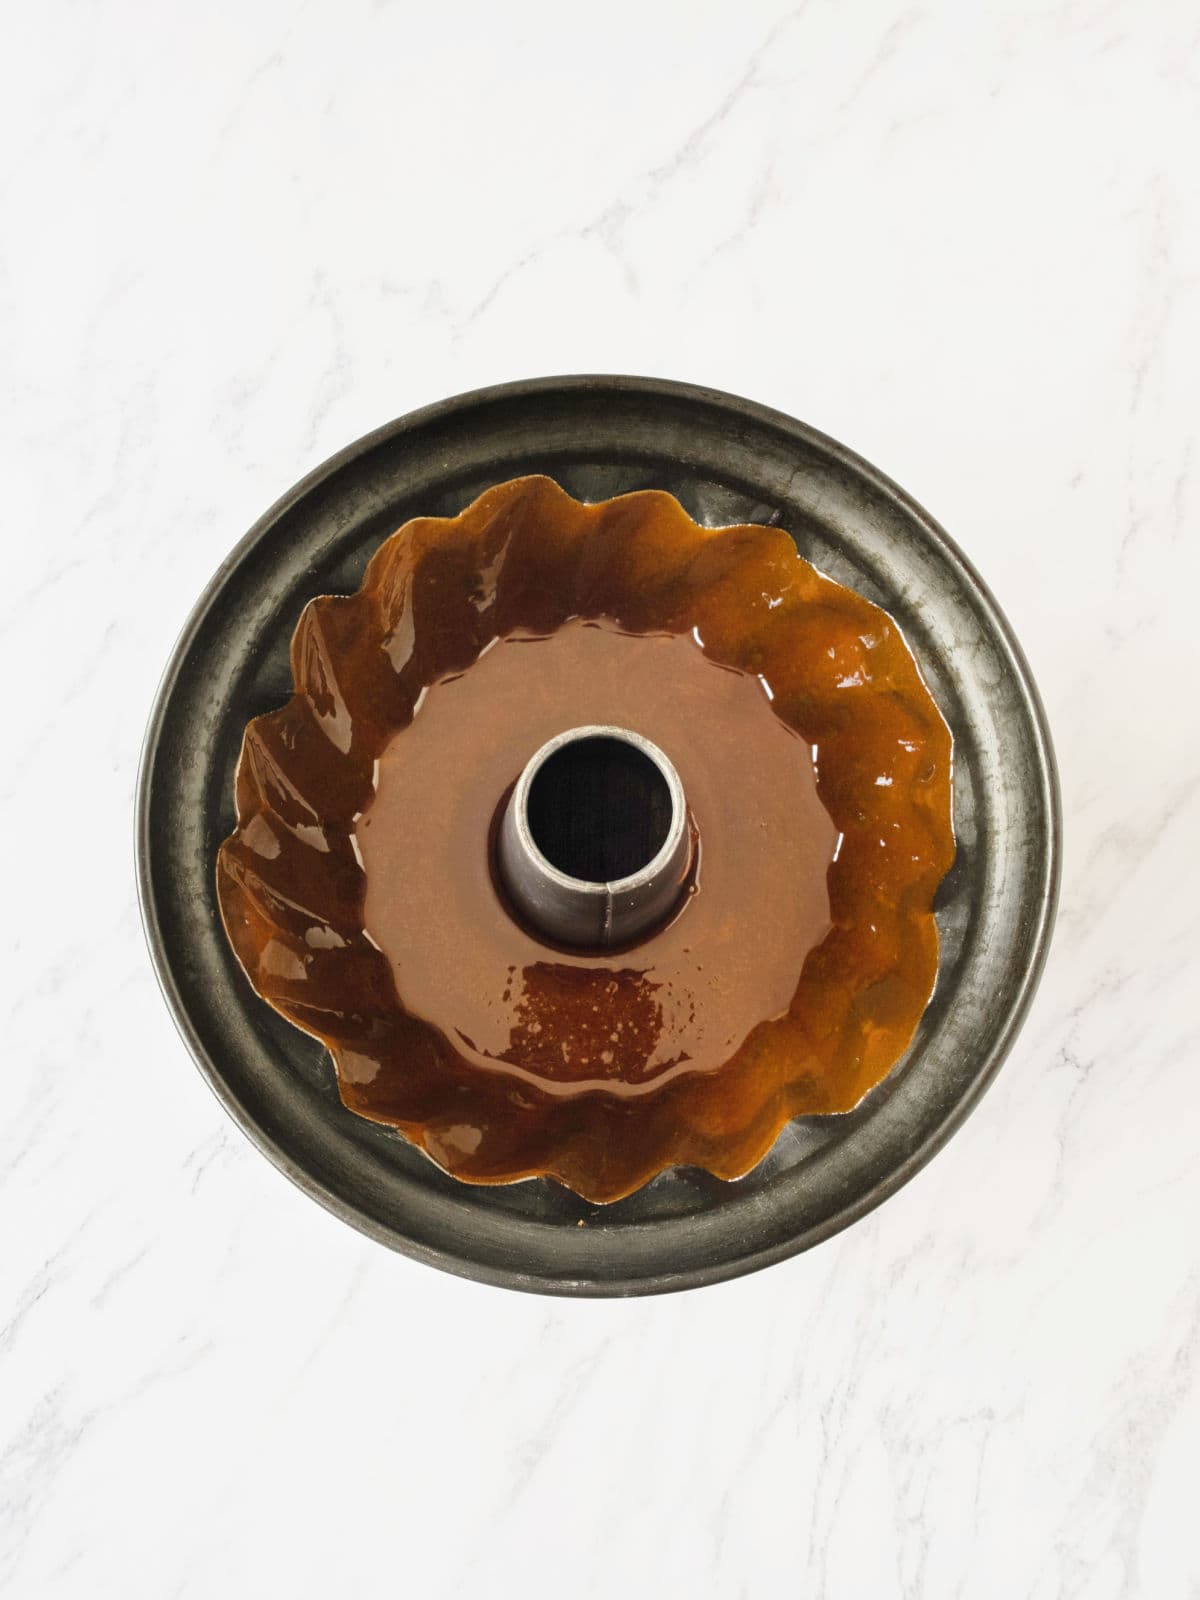 Caramelized dark bundt pan on white marble. 